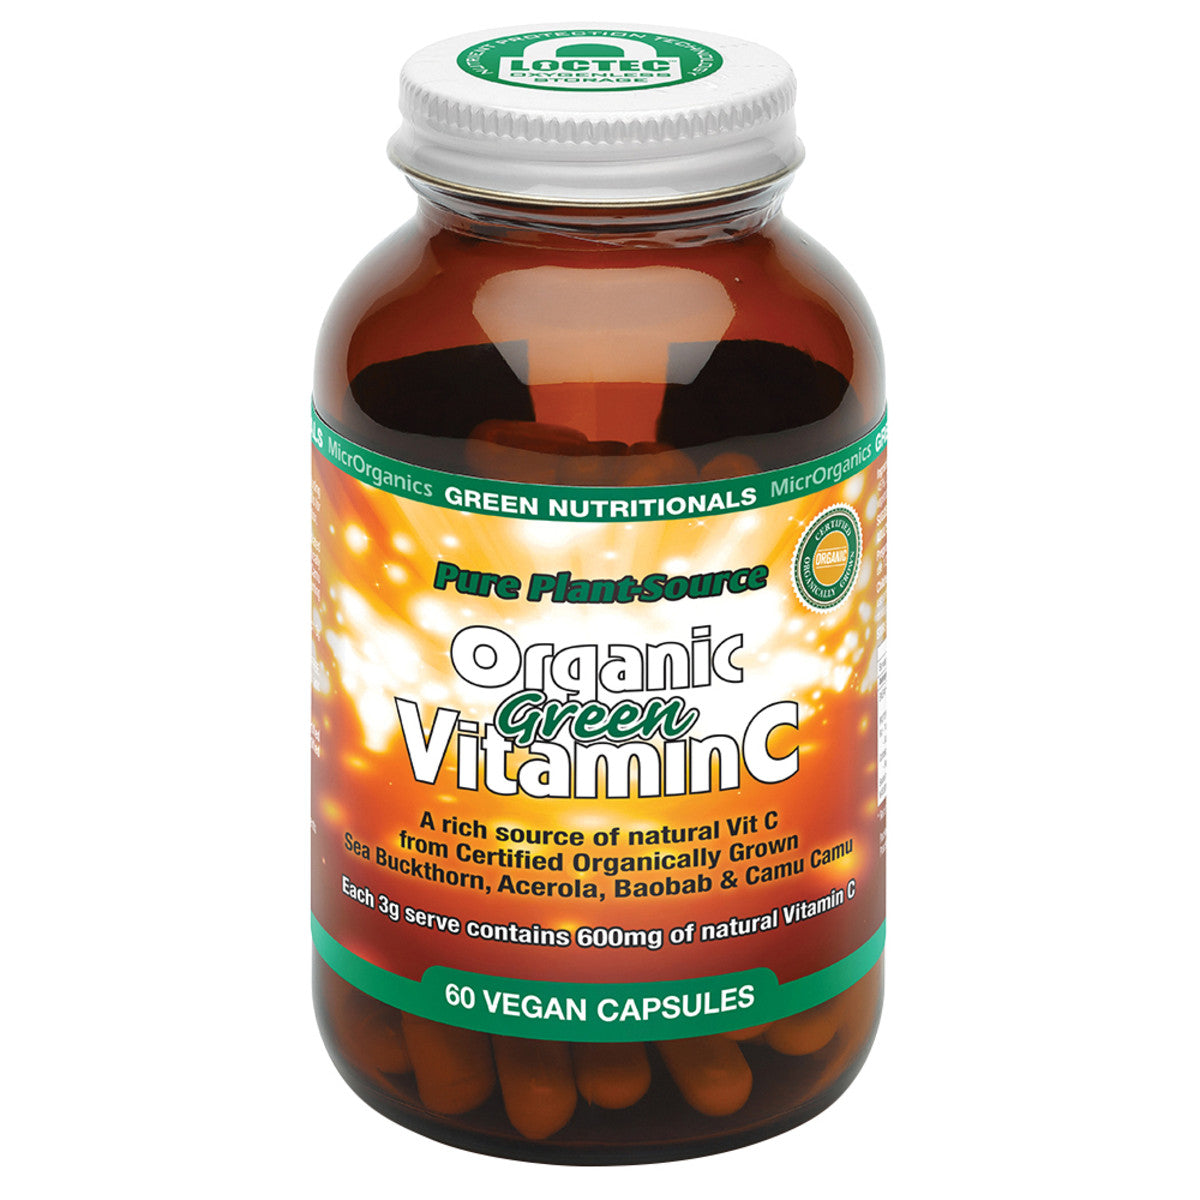 Green Nutritionals - Pure Plant-Source Organic Green Vitamin C